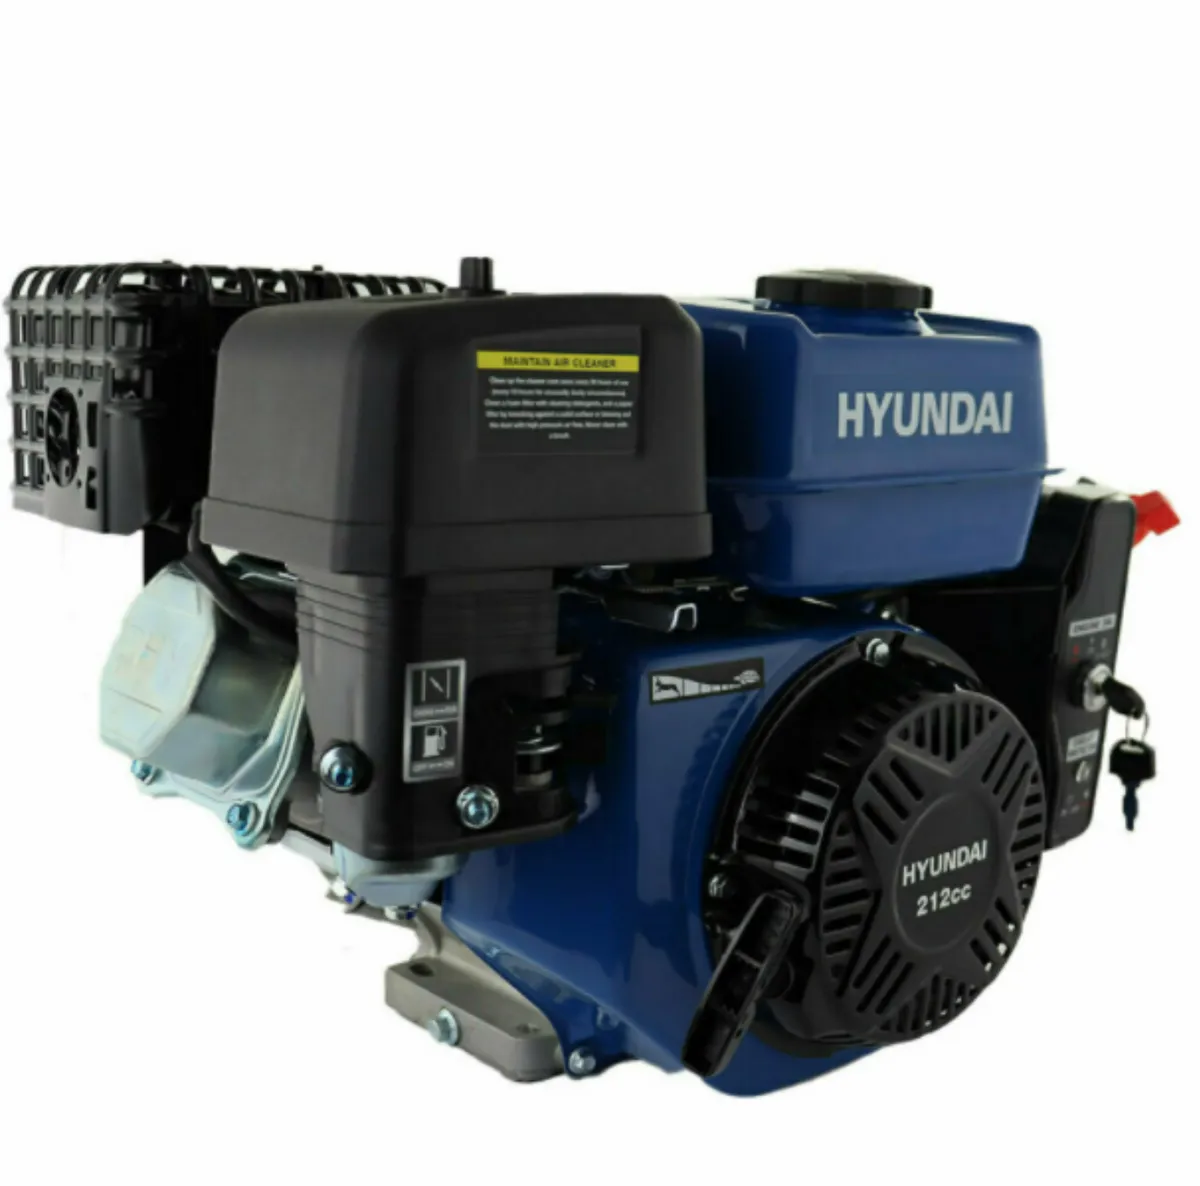 Hyundai 212cc 7hp Petrol Engine (4-Stroke) - Image 1